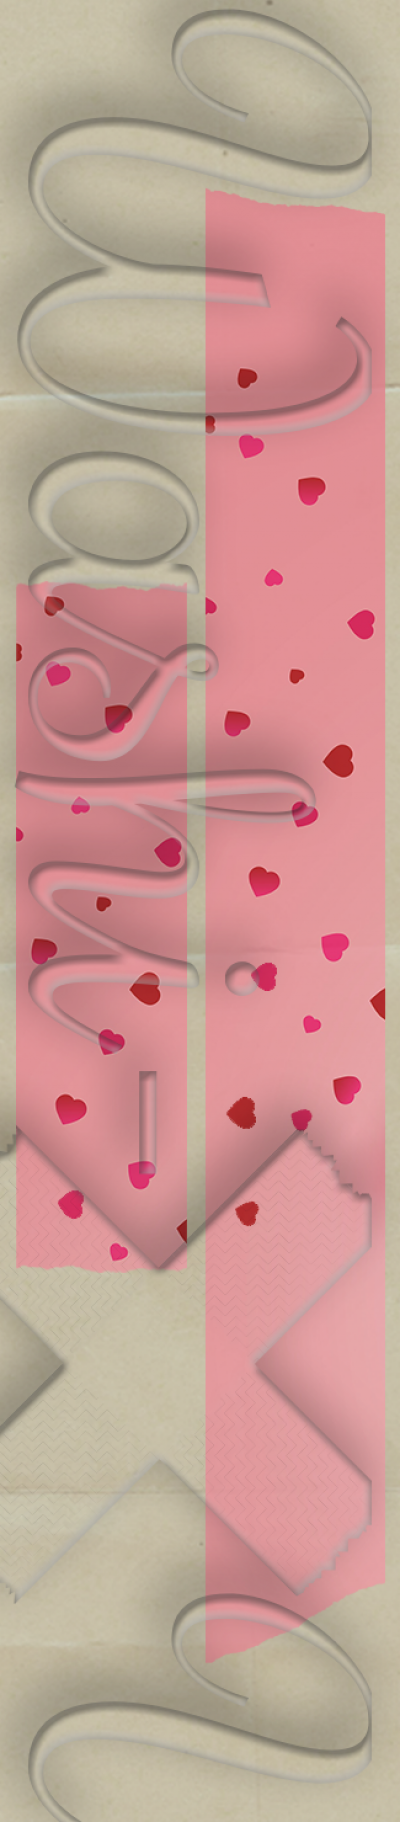 Washi-X Washi Tape Romantic pink air and hearts patterned washi tape